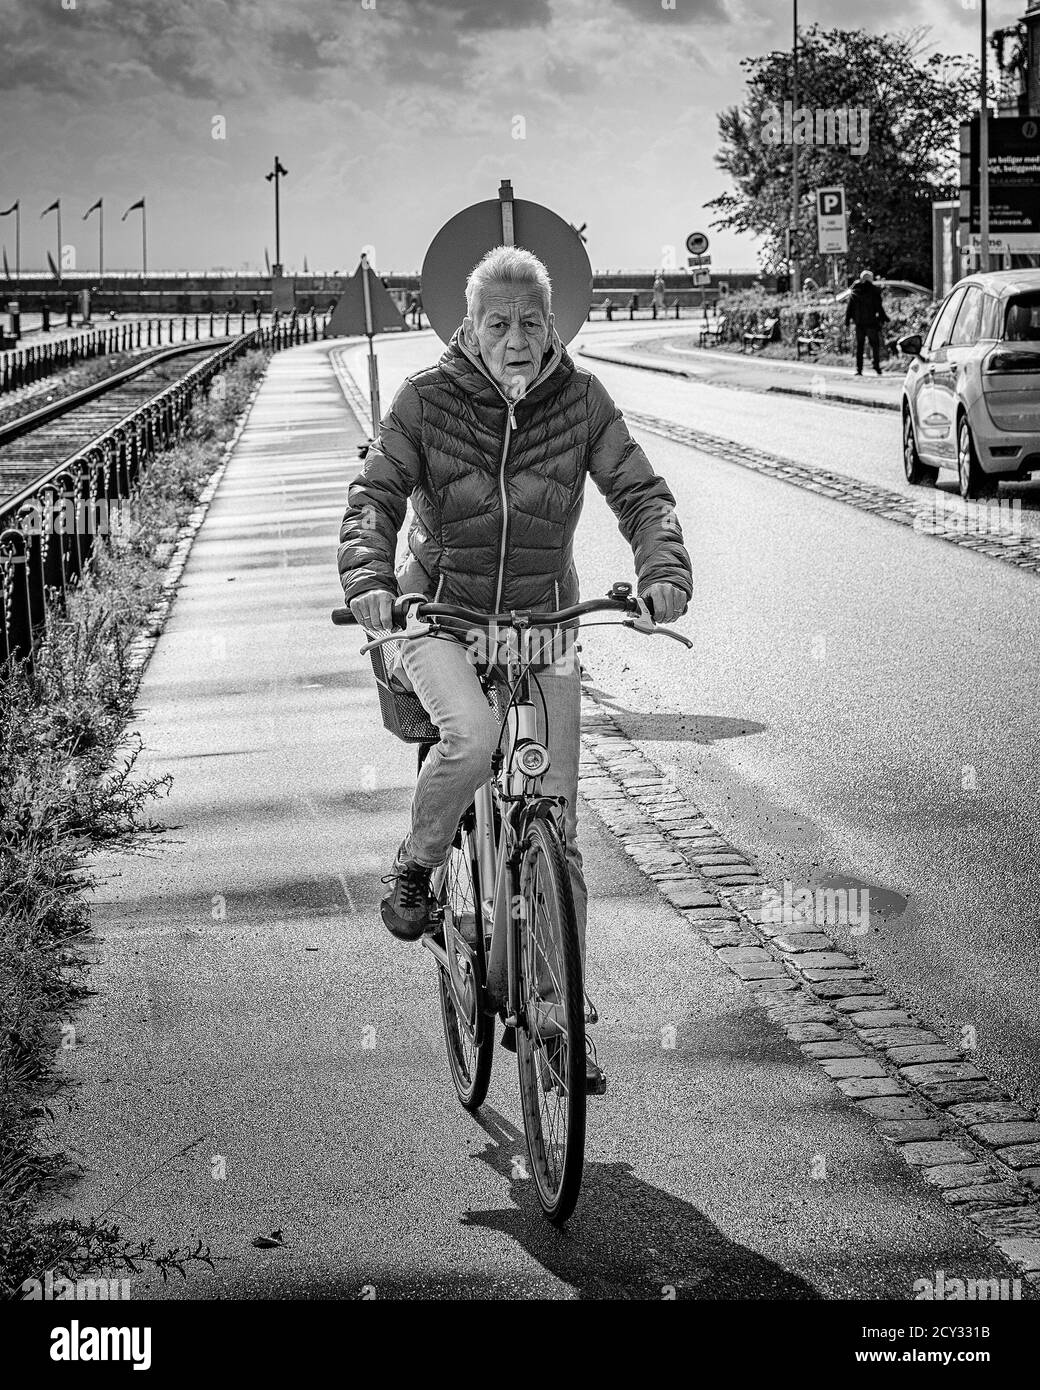 HELSINGOR, DENMARK - SEPTEMBER 05, 2020: A female pensioner cycles around the city streets on her bike. Stock Photo